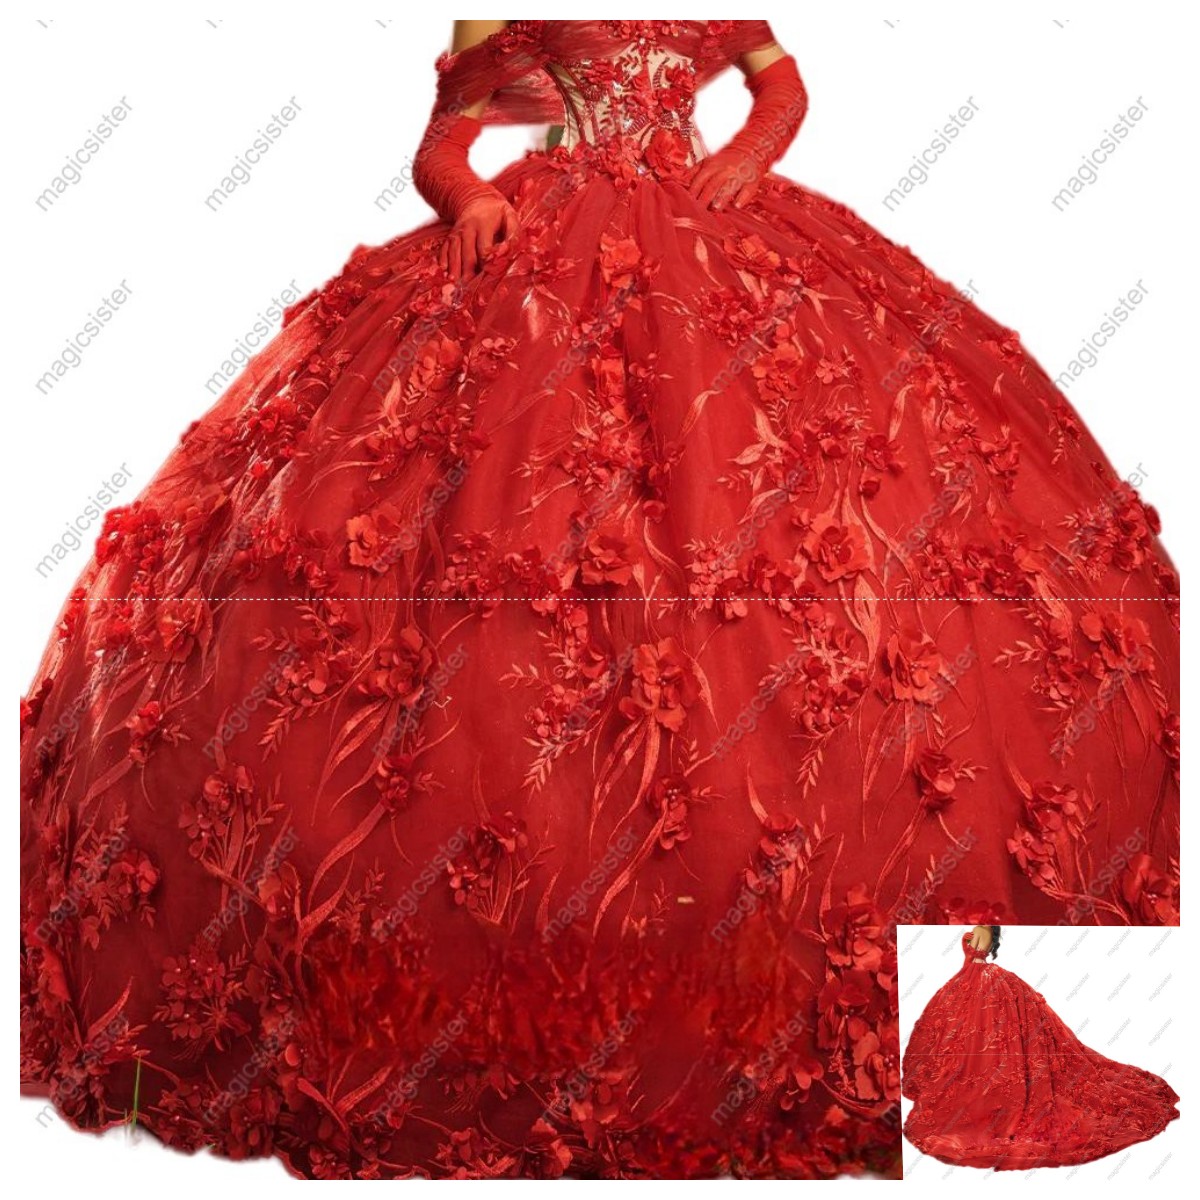 Luxury Factory Wholesale 3D Flower Quinceanera Dress